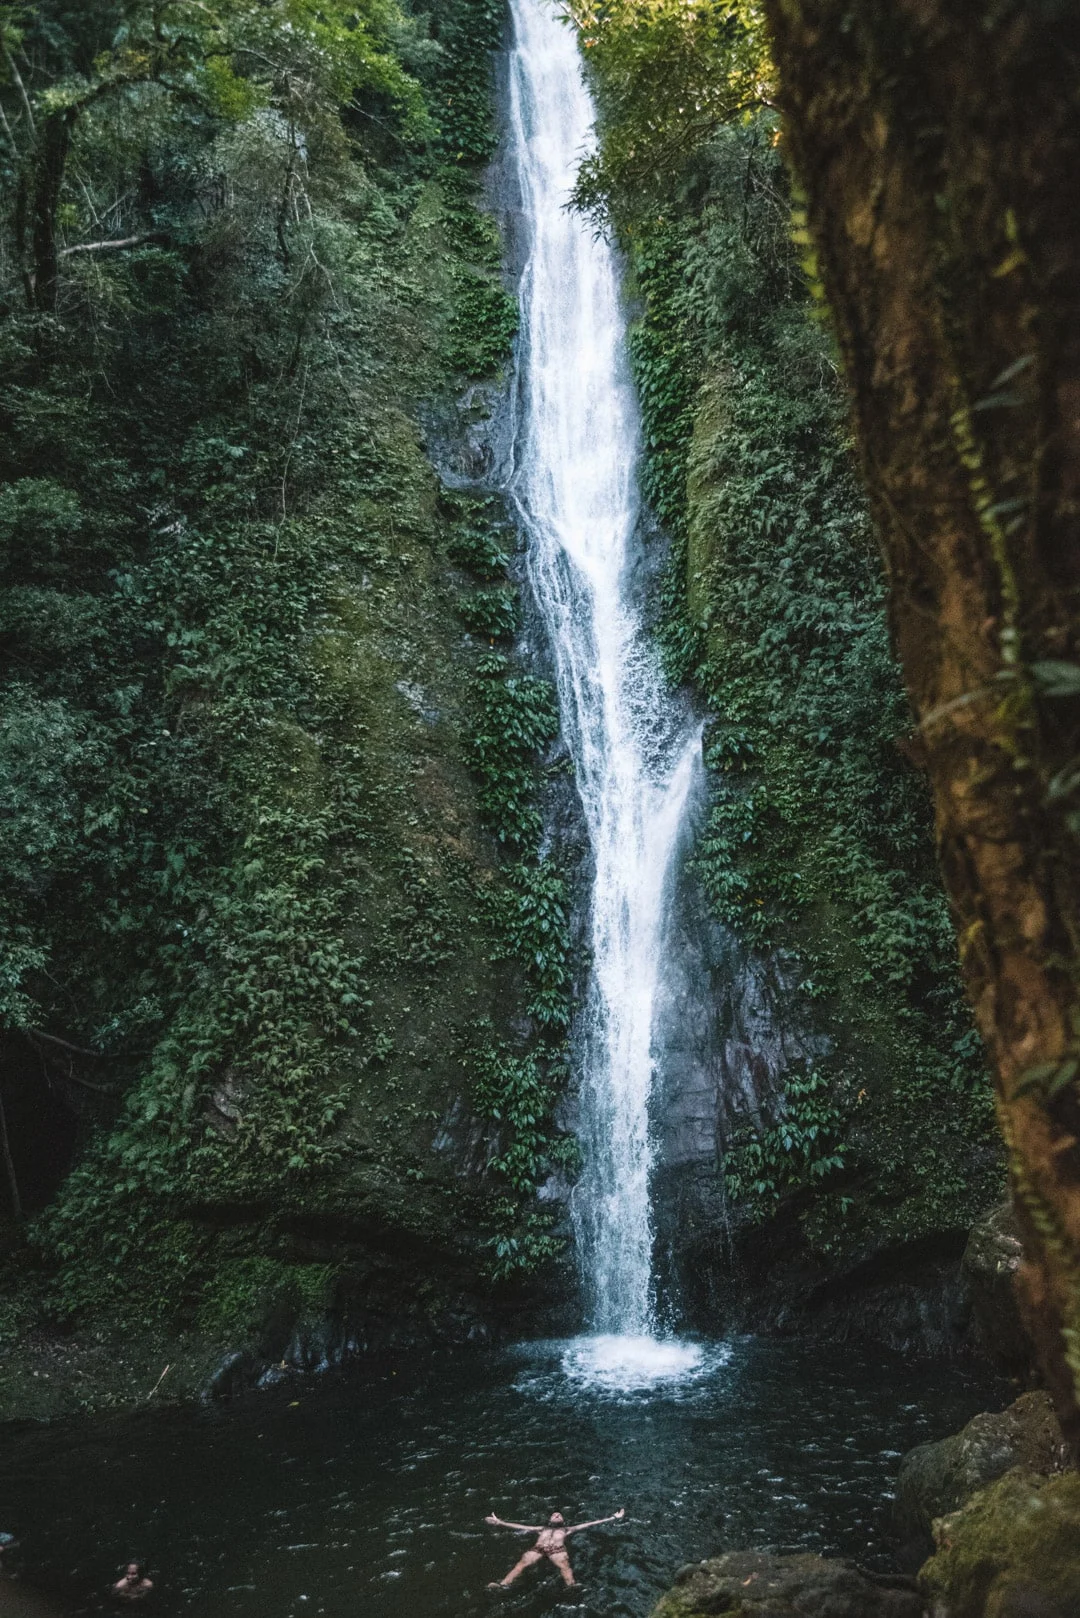 Timangtang Rock, Kabigan falls, kabigan waterfalls, kabigan falls pagudpud, kabigan falls in ilocos norte